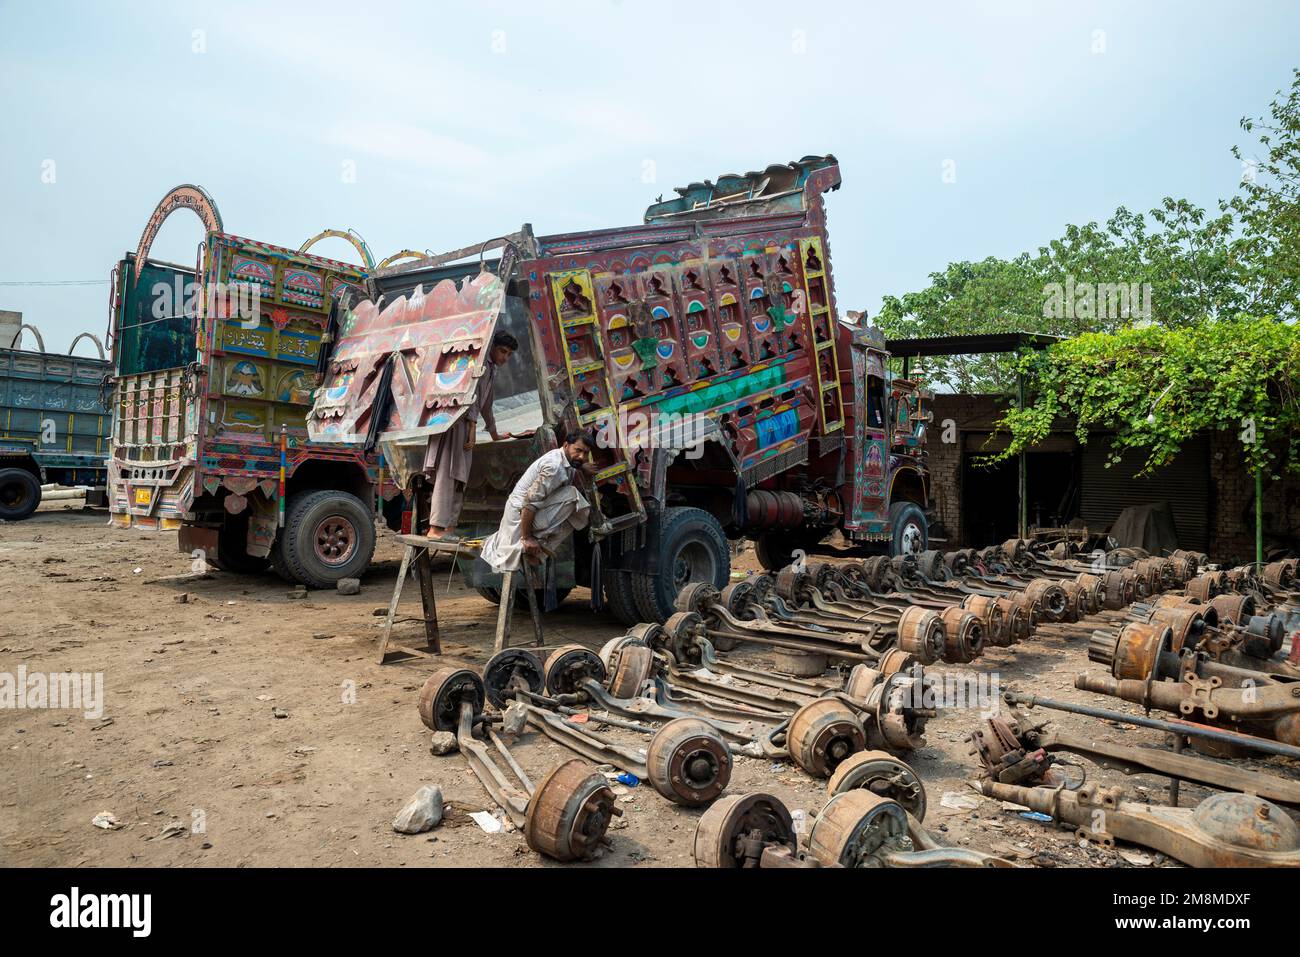 Colorfully painted trucks at the workshop, Peshawar, Pakistan Stock Photo